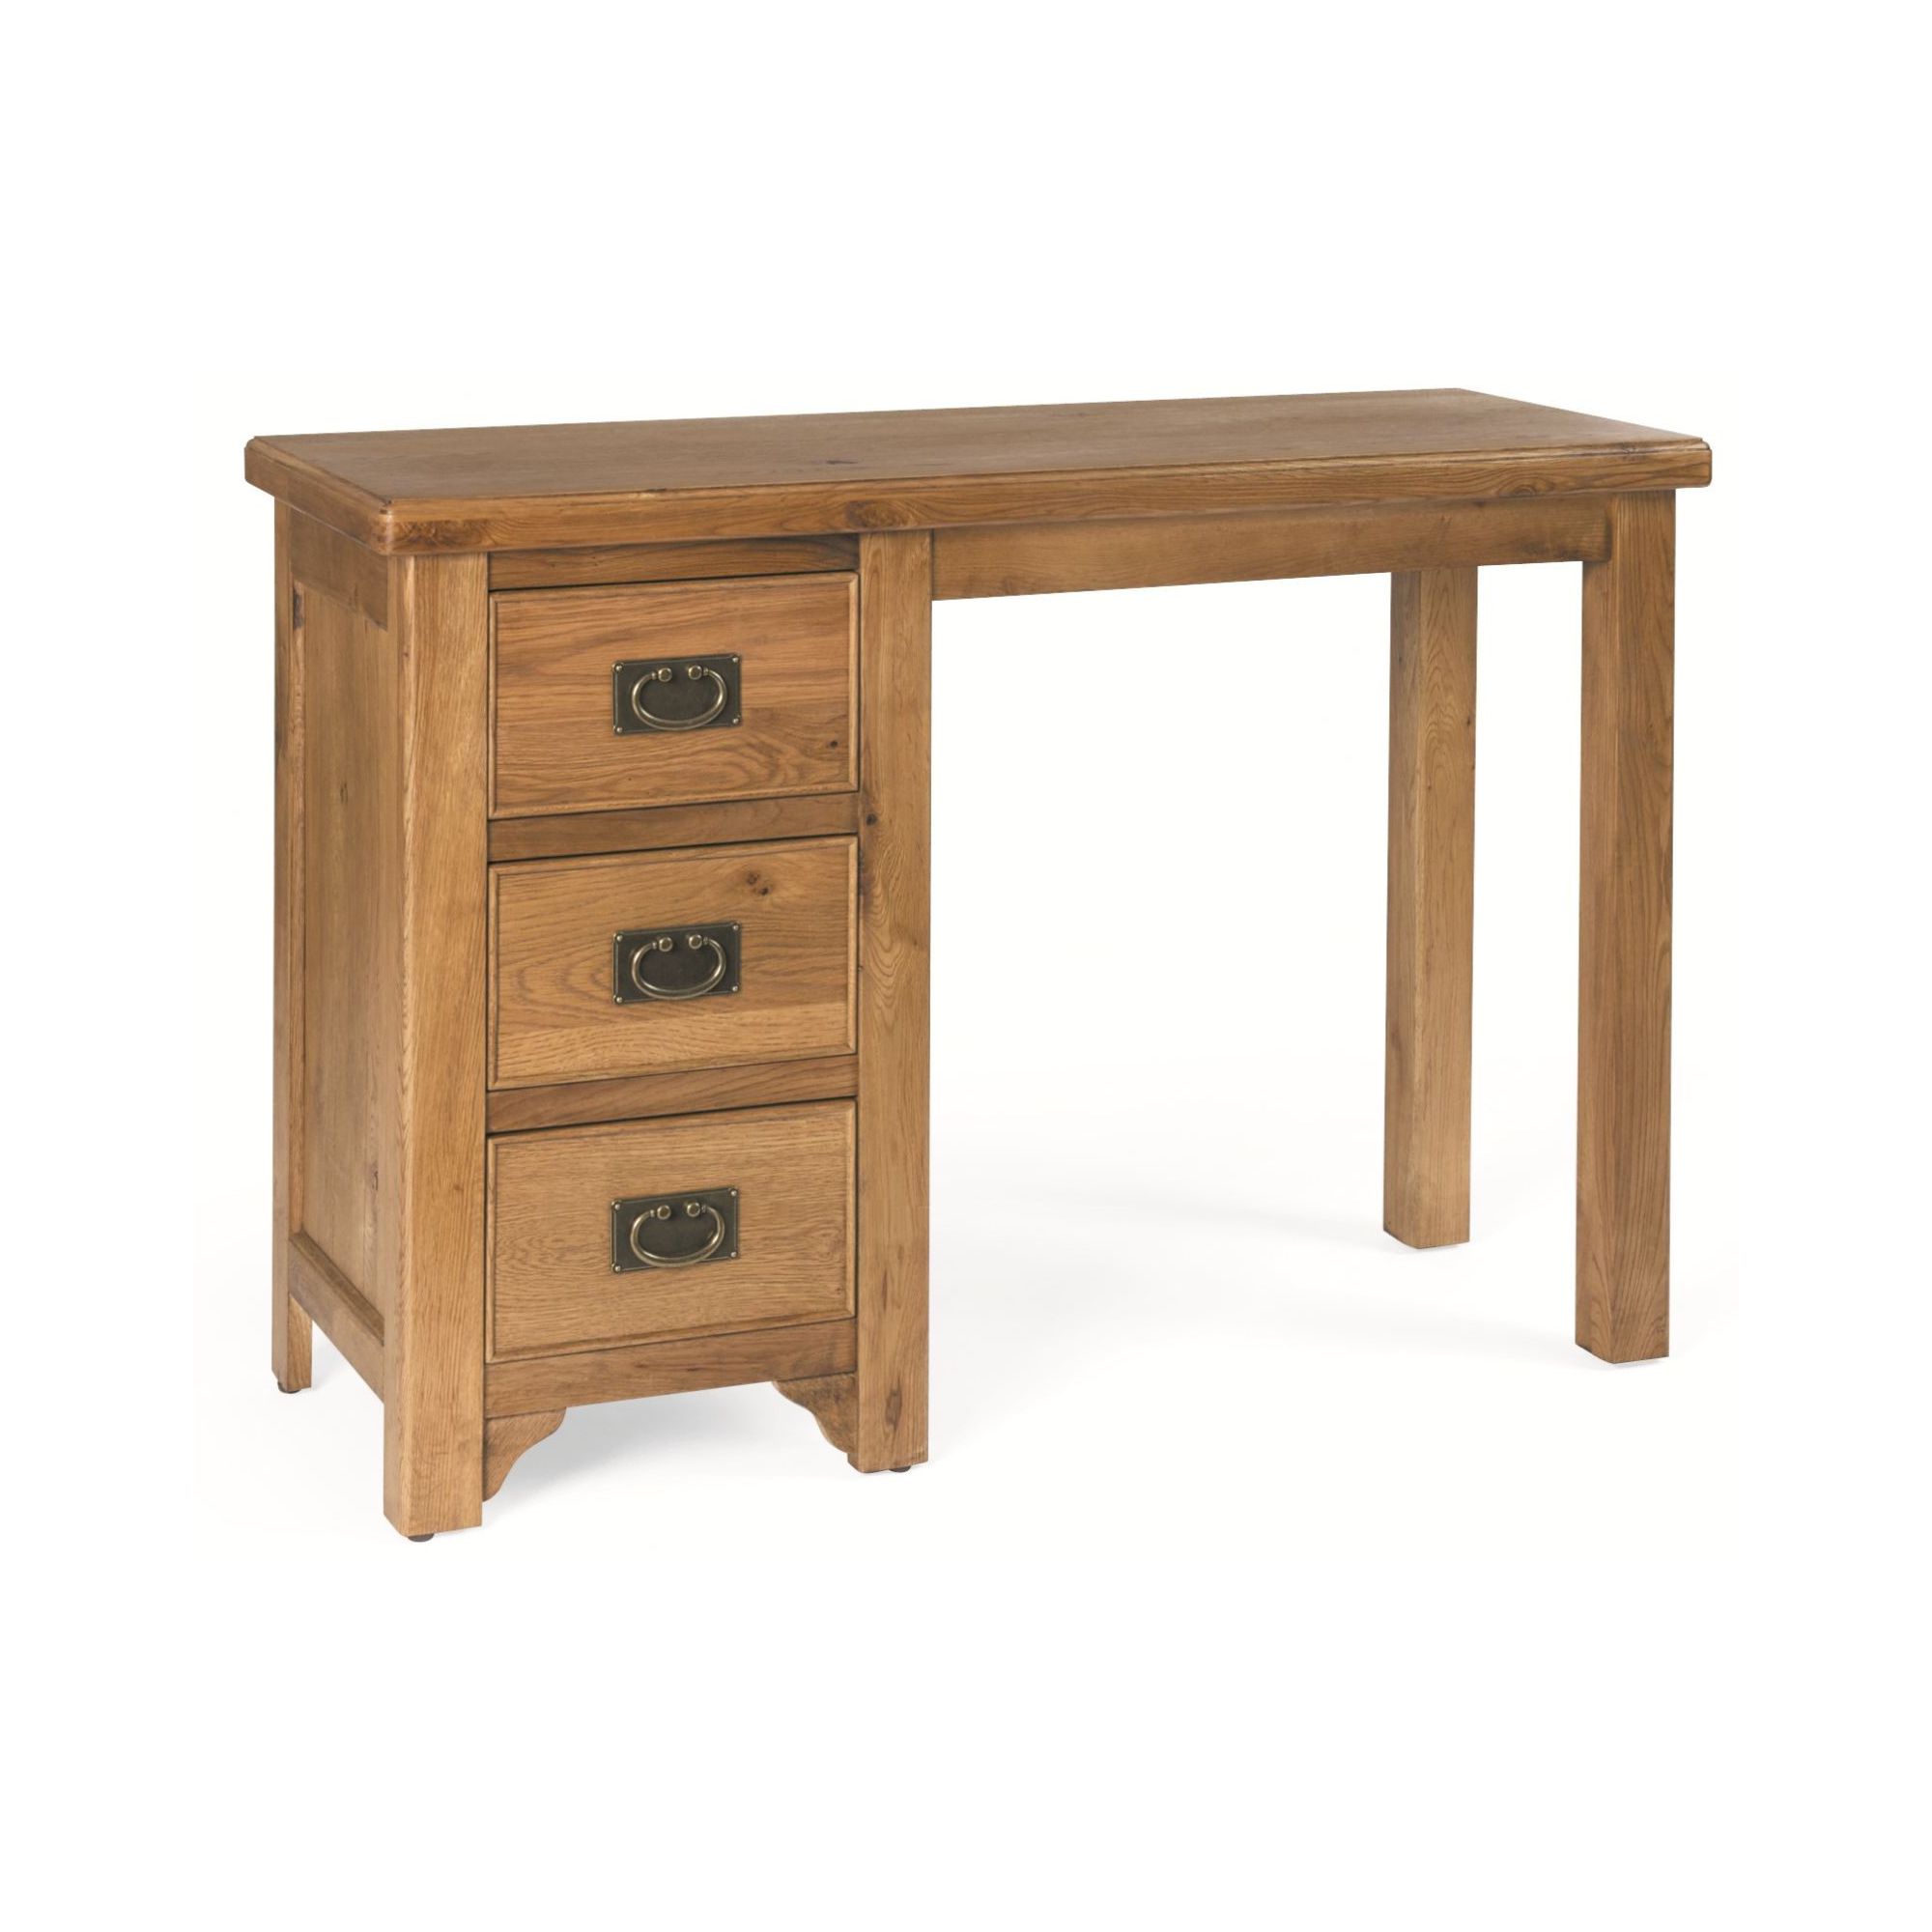 Kelburn Furniture Marino Rustic Oak Dressing Table at Tesco Direct